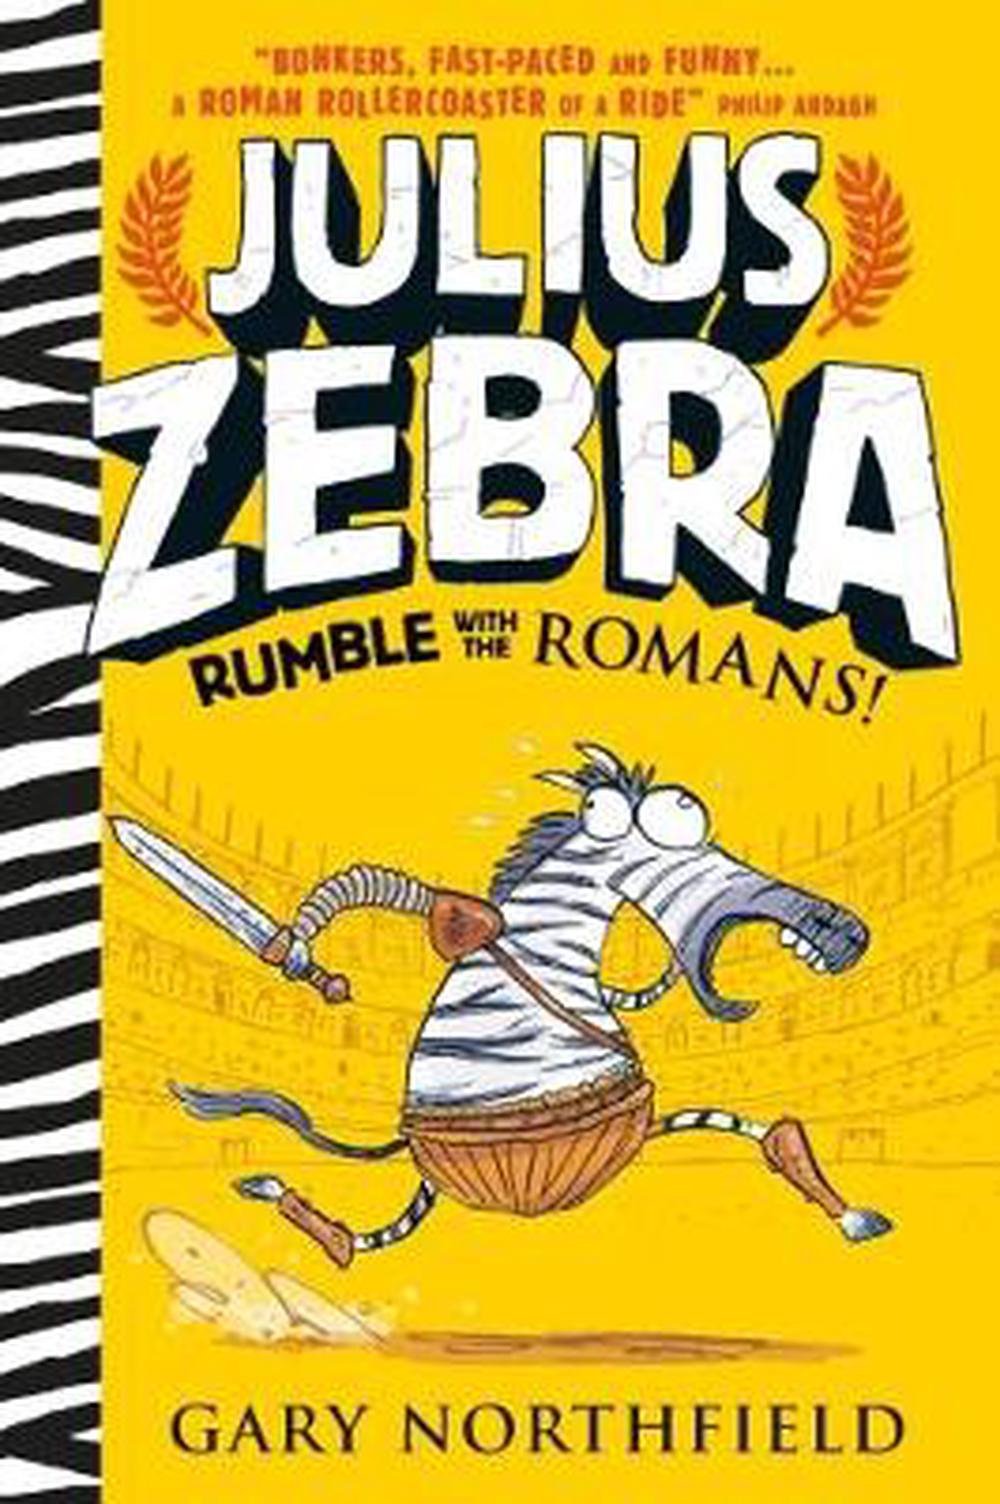 Julius Zebra 1:Rumble With Roman